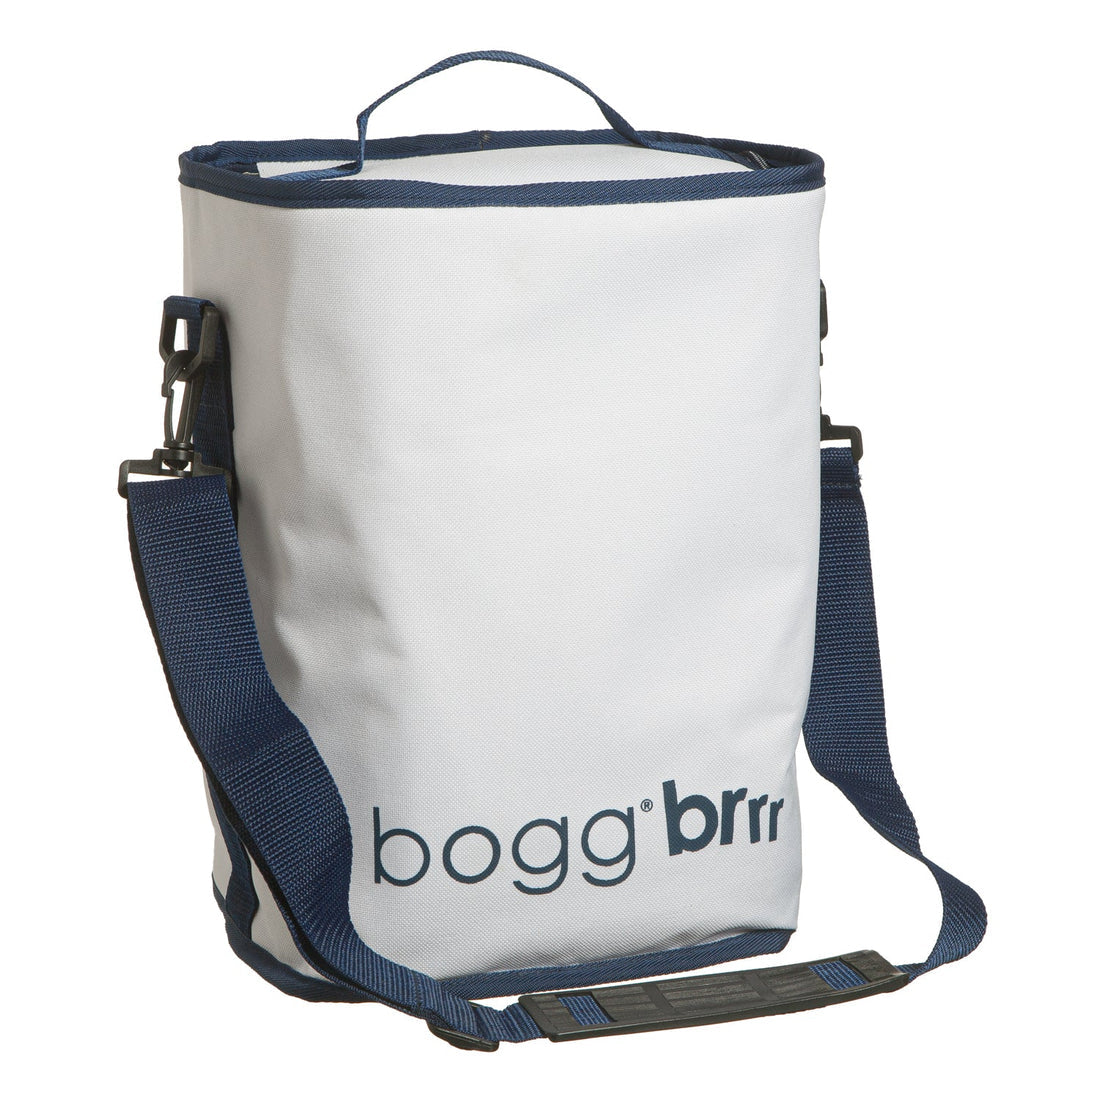 Bogg Bag Cooler Insert: Brr and a Half - White